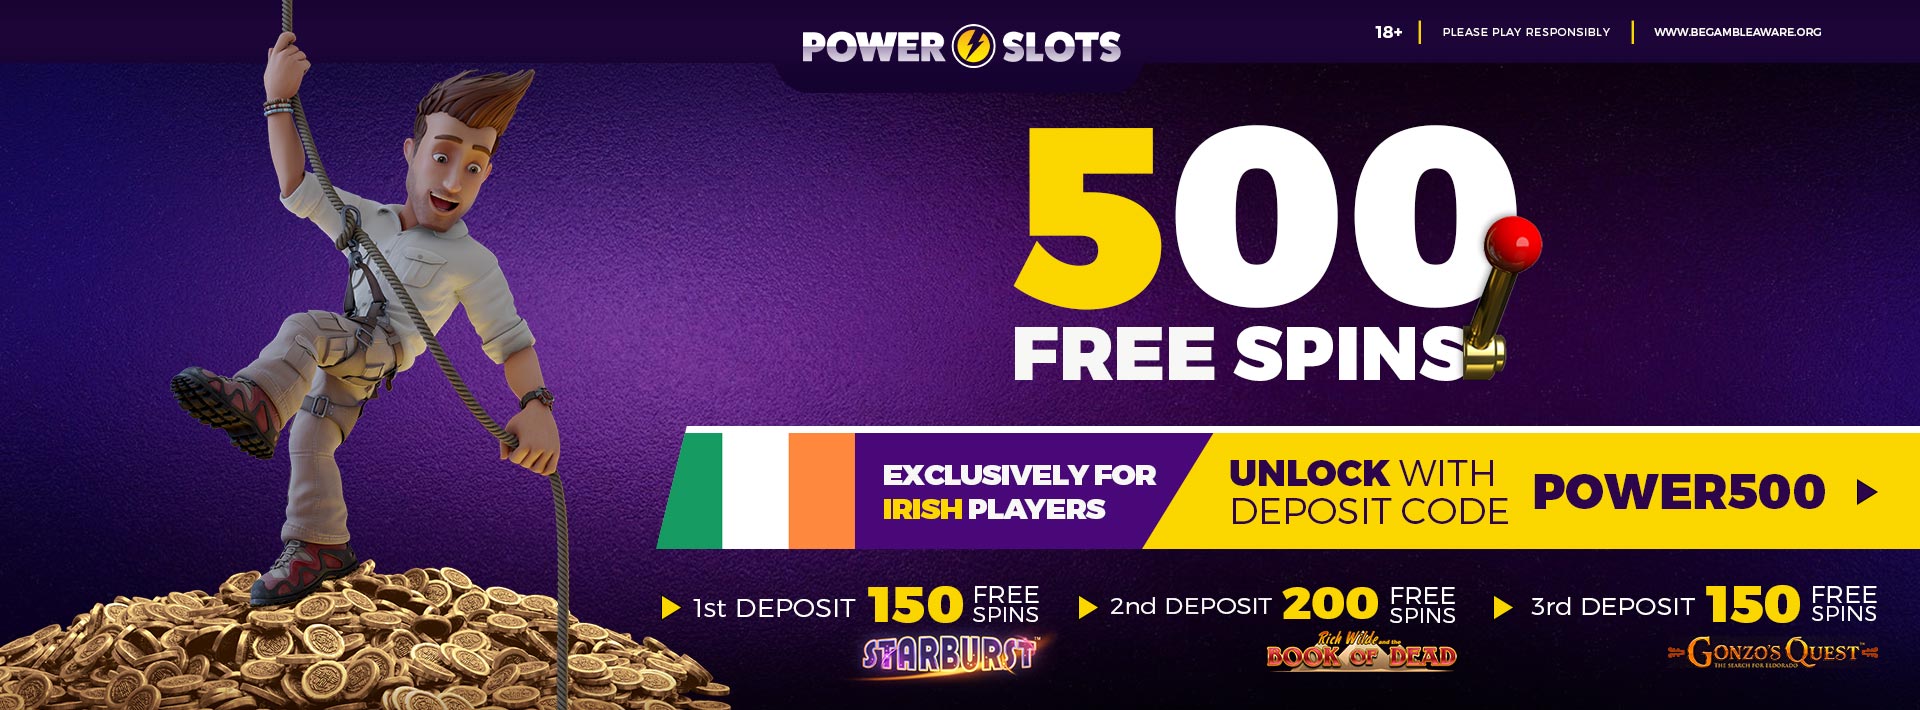 500 FREE SPINS | Power Slots Casino